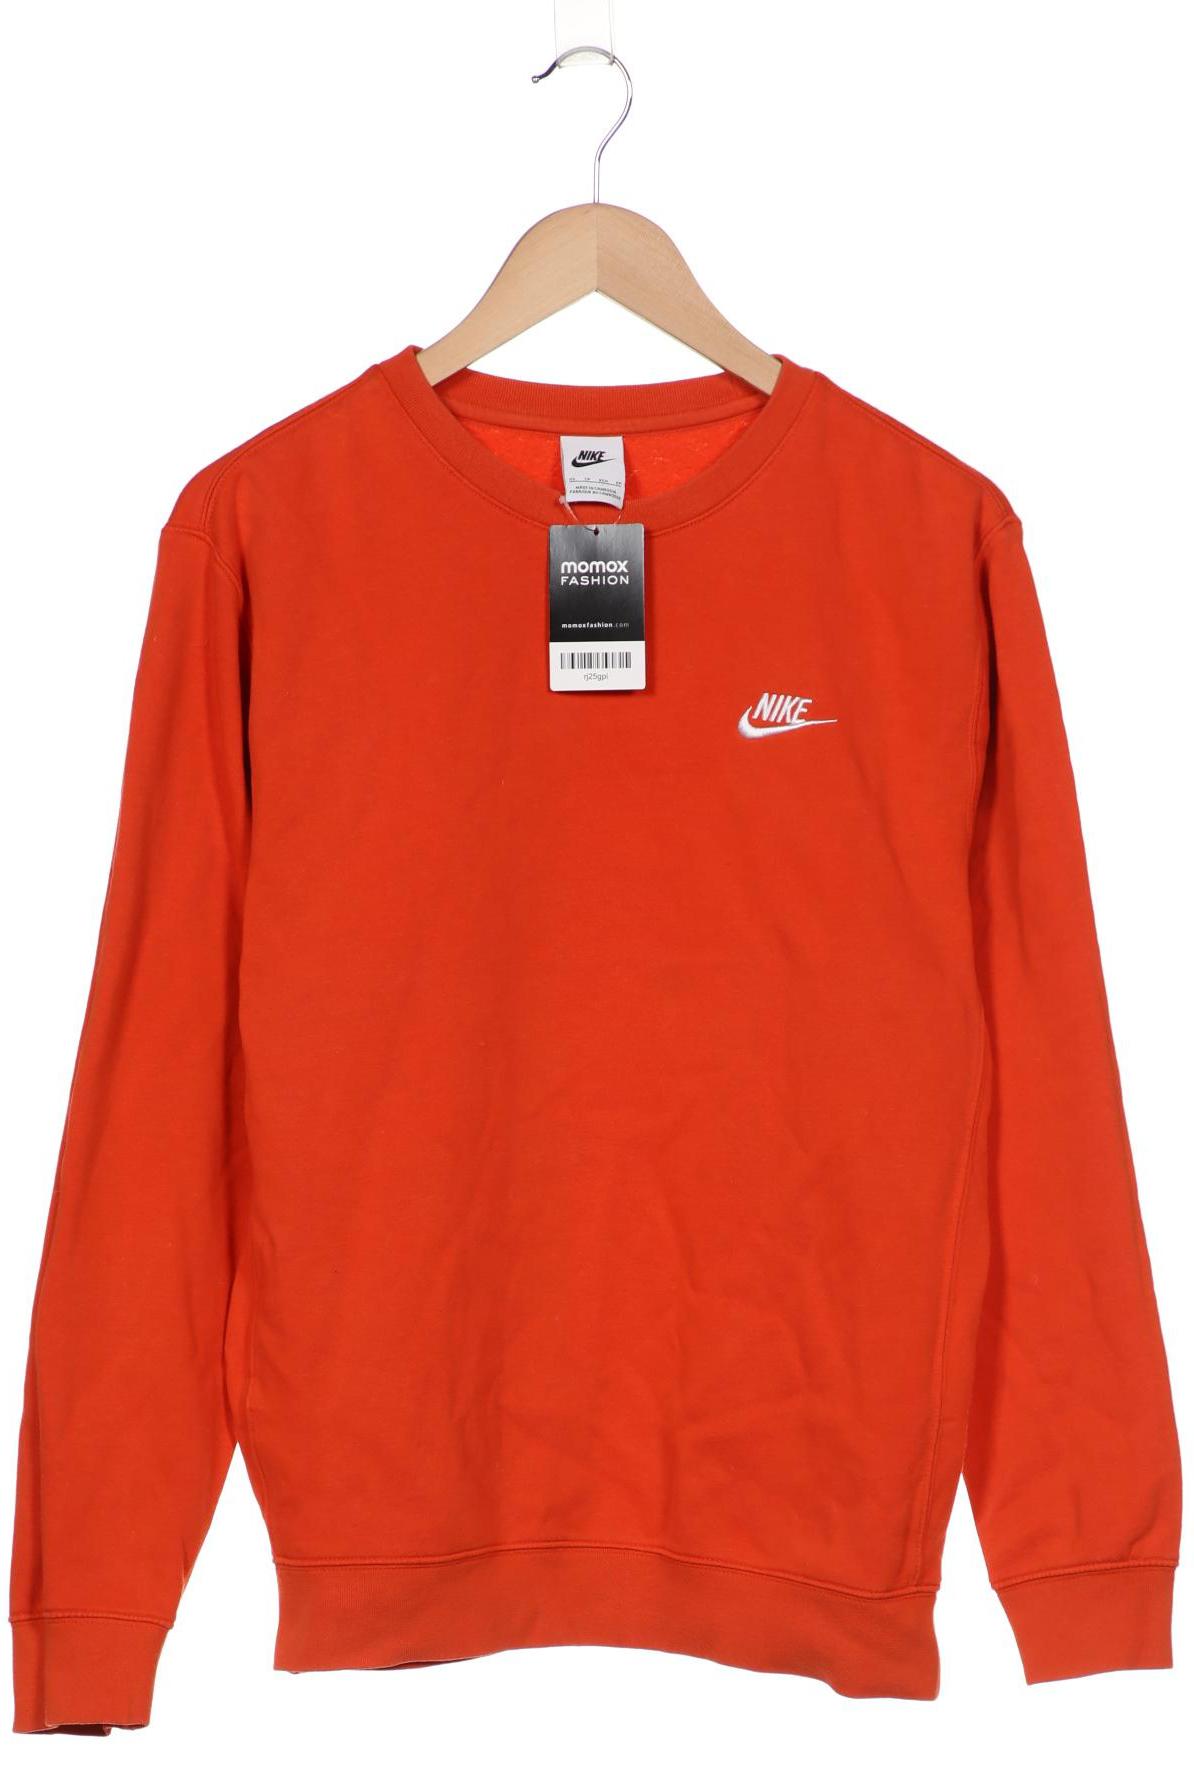 Nike Herren Sweatshirt, orange von Nike